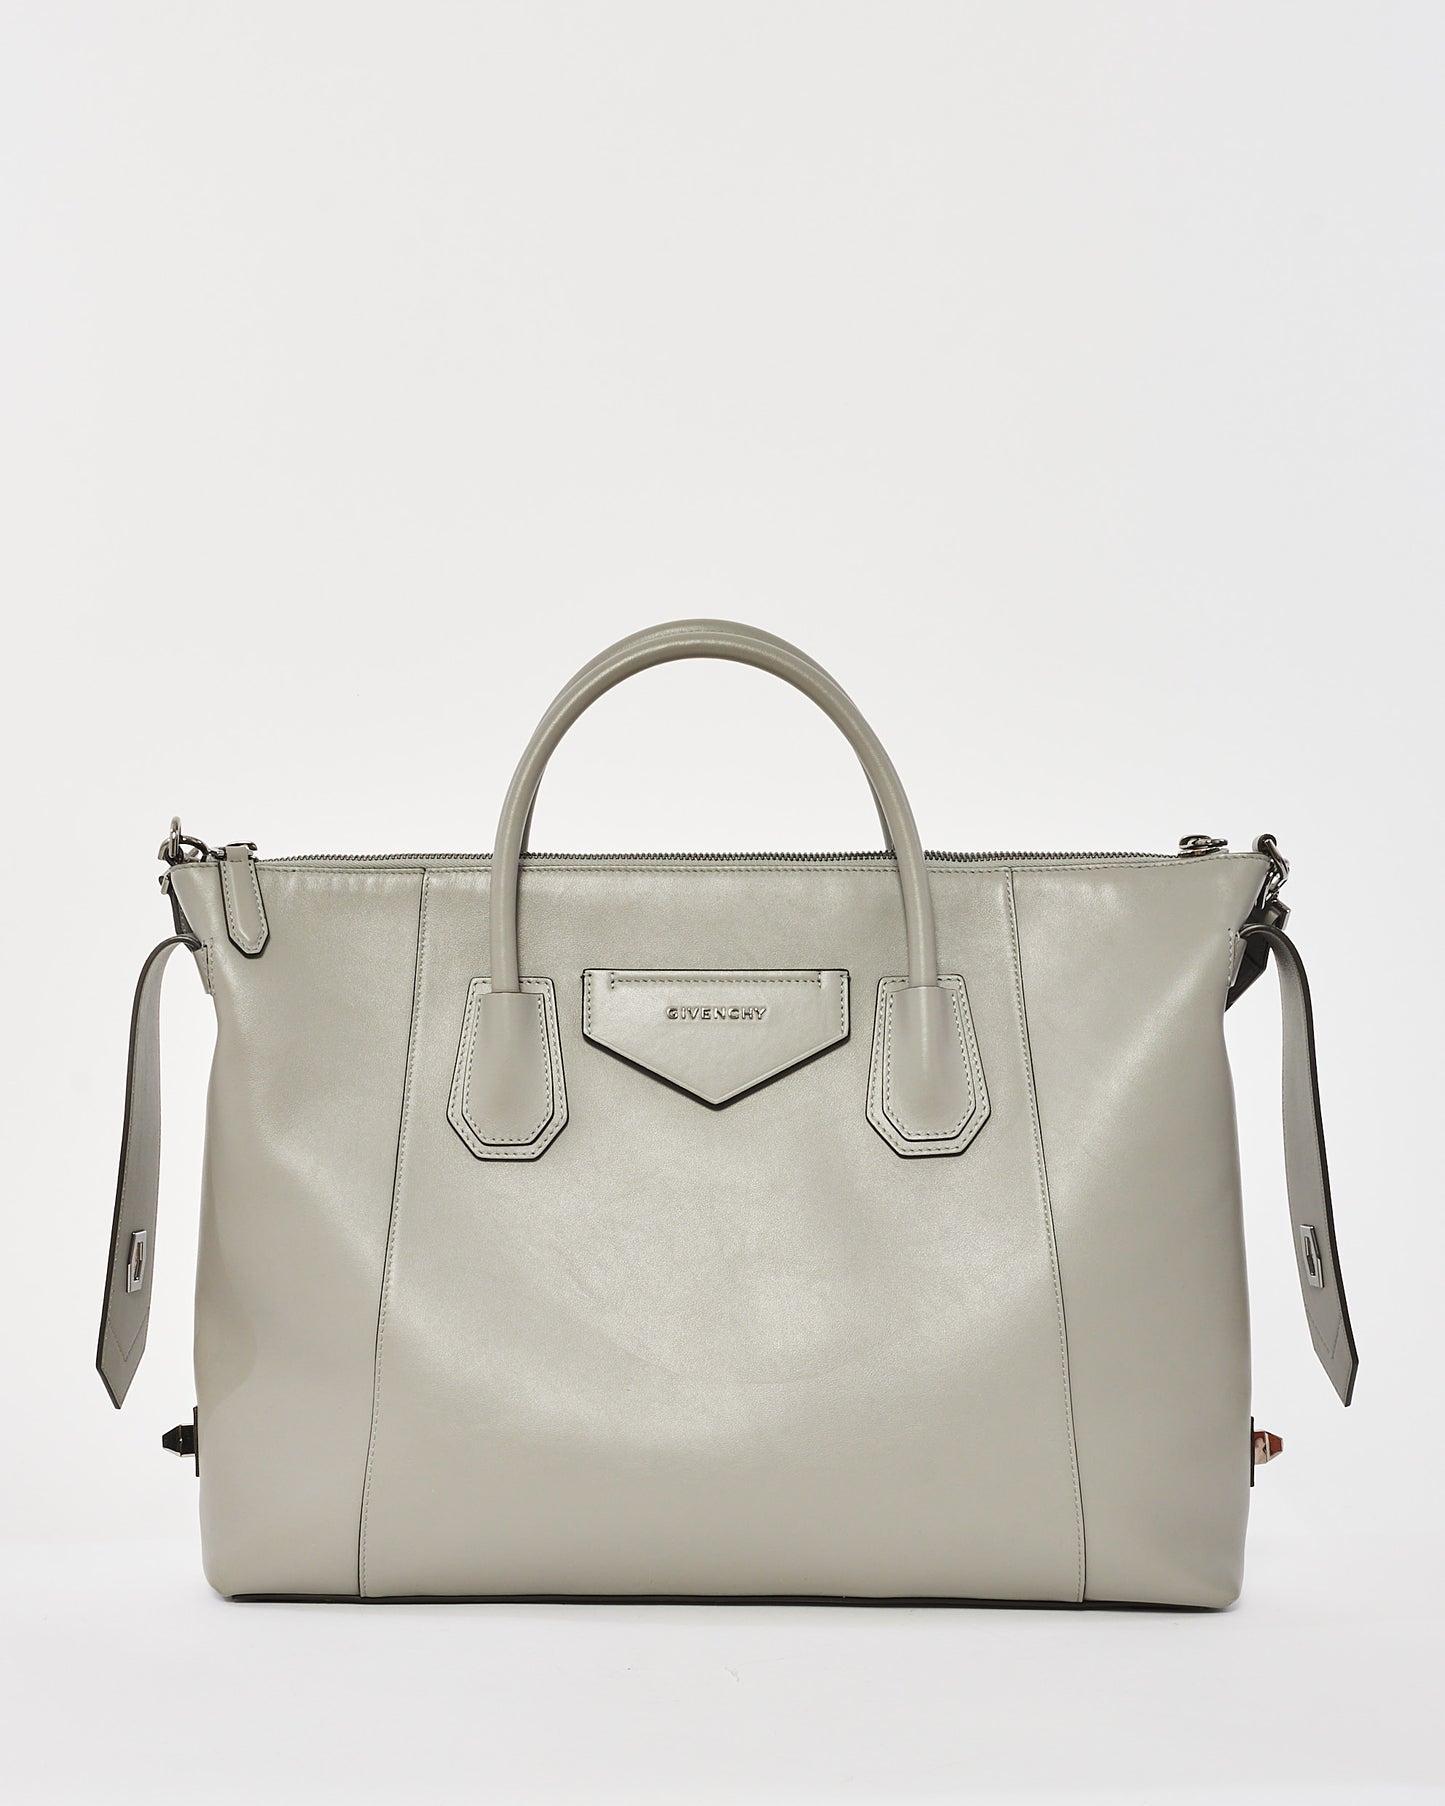 Givenchy Grey Leather Medium Soft Antigona Tote Bag